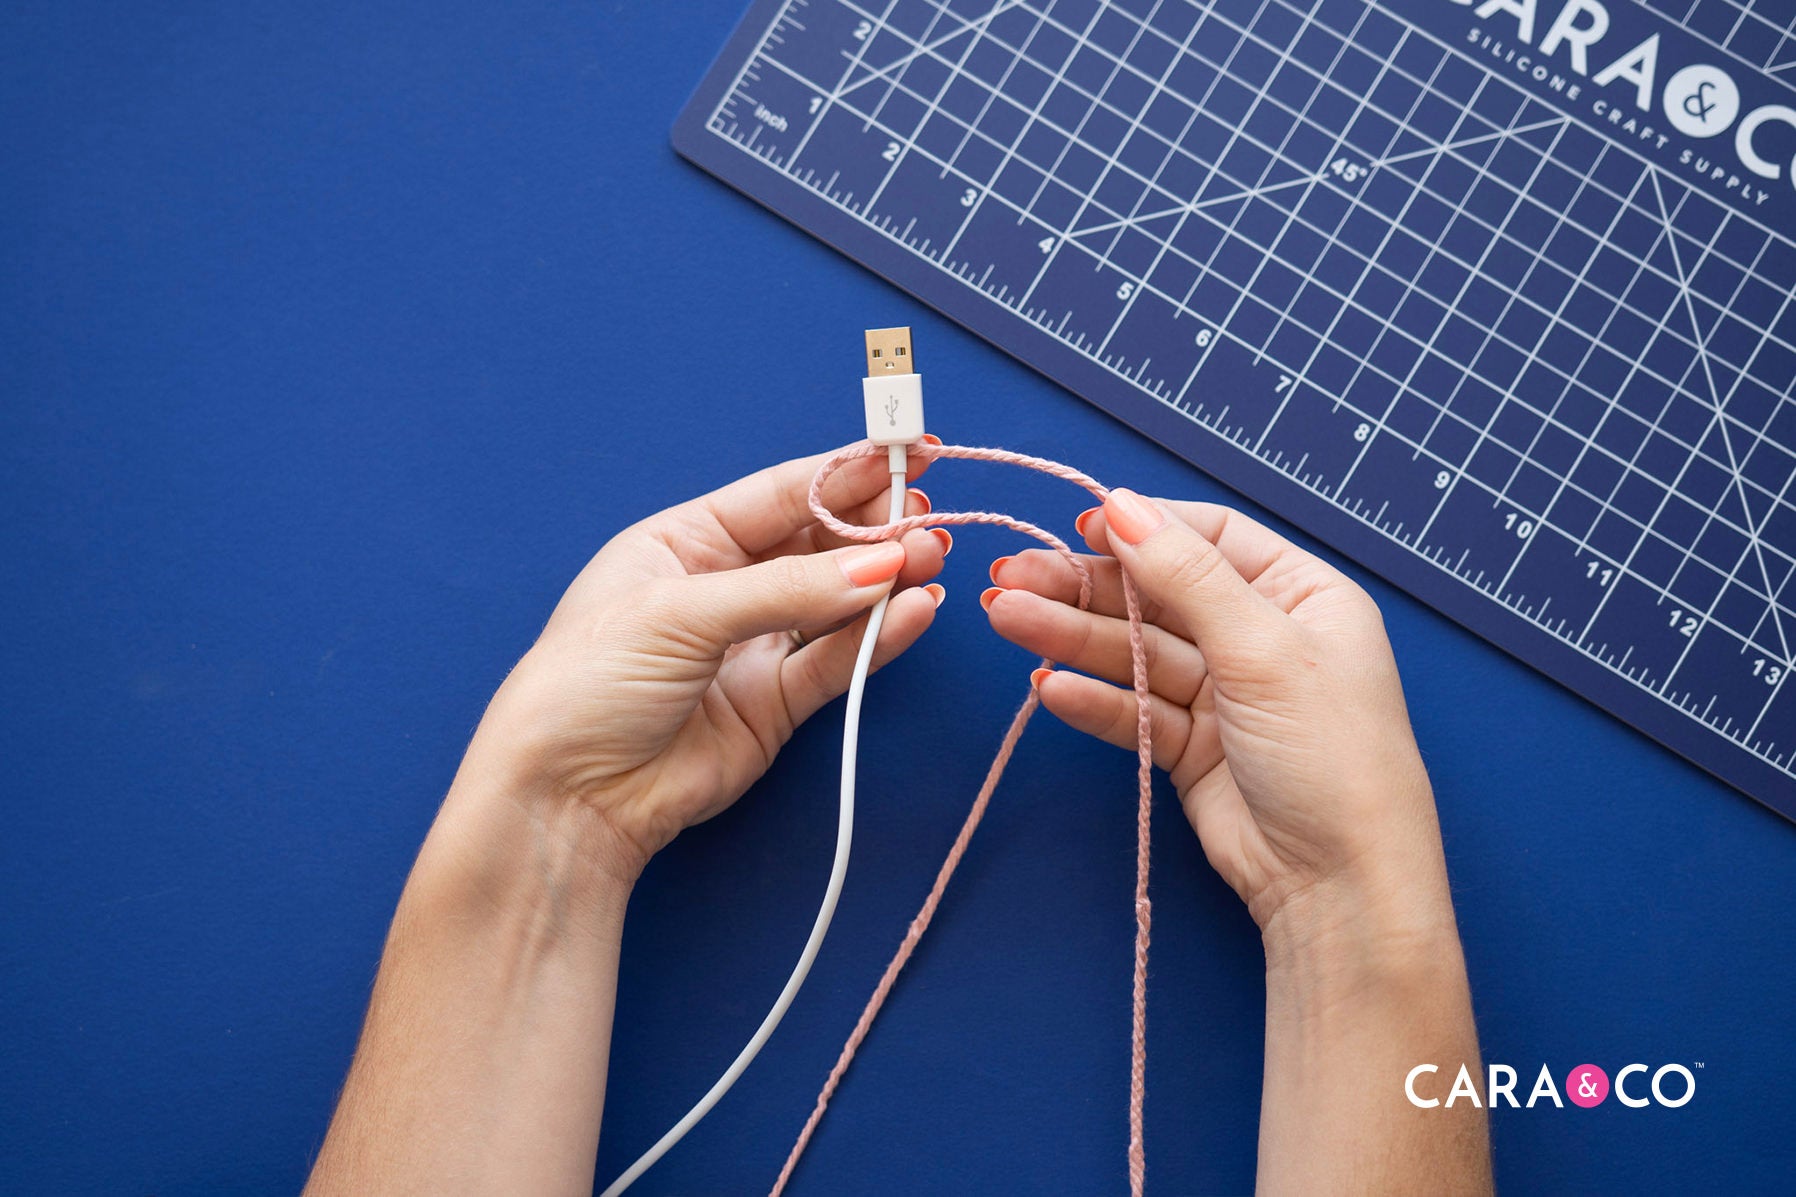 DIY Macrame phone charger cord - Cara & Co